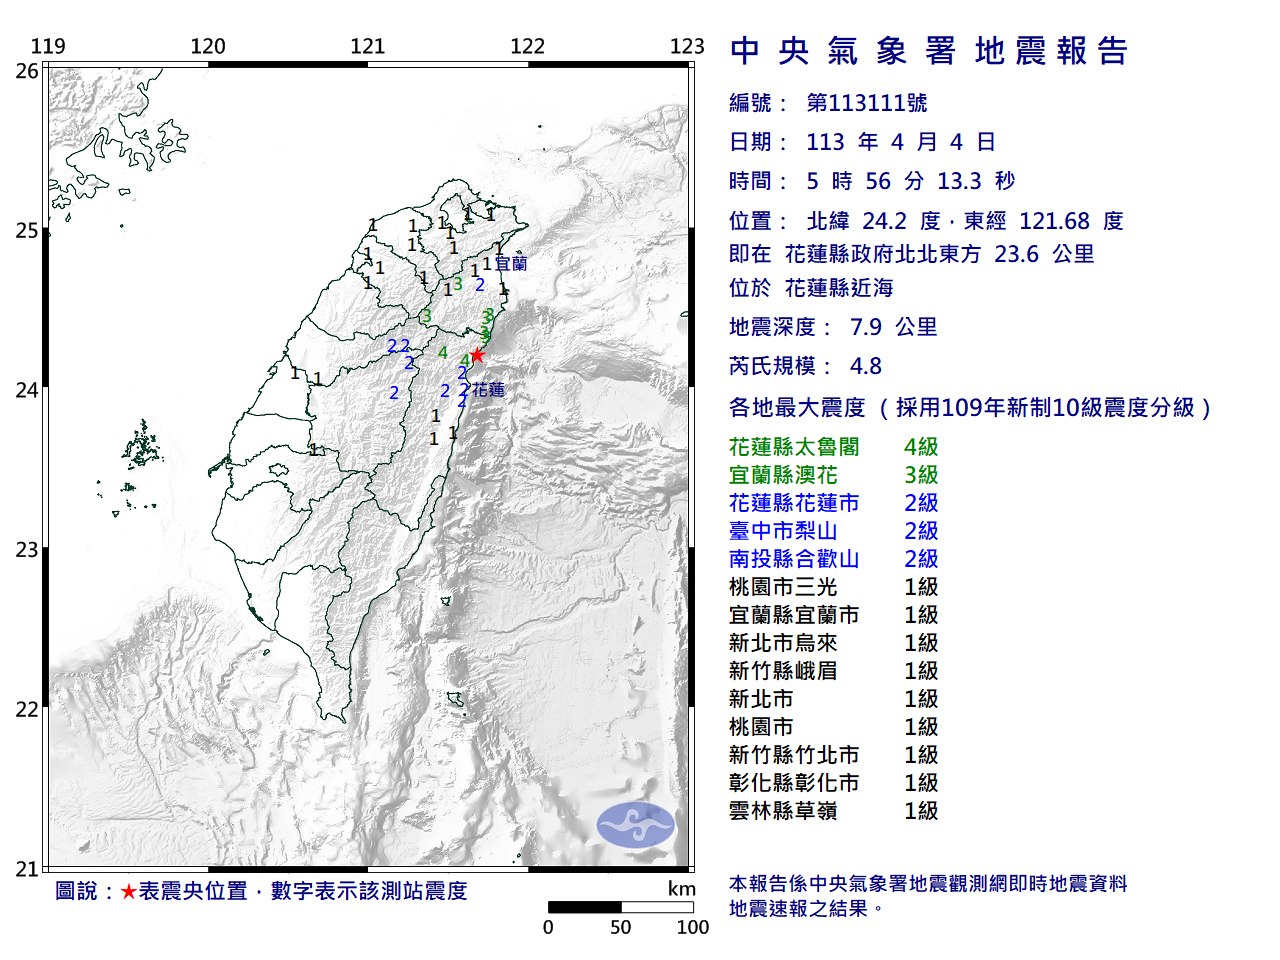 taiwan-earthquake-aftershock-alarm